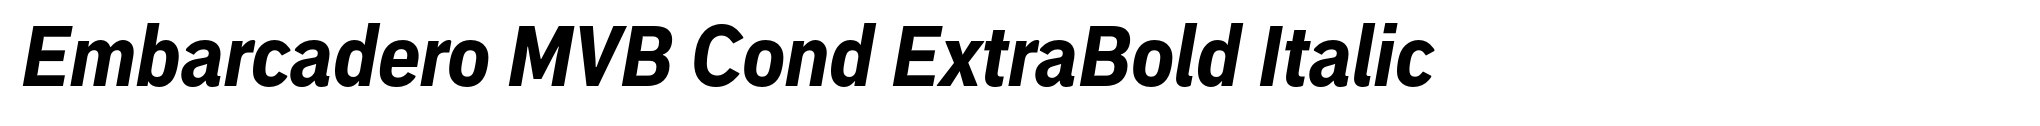 Embarcadero MVB Cond ExtraBold Italic image